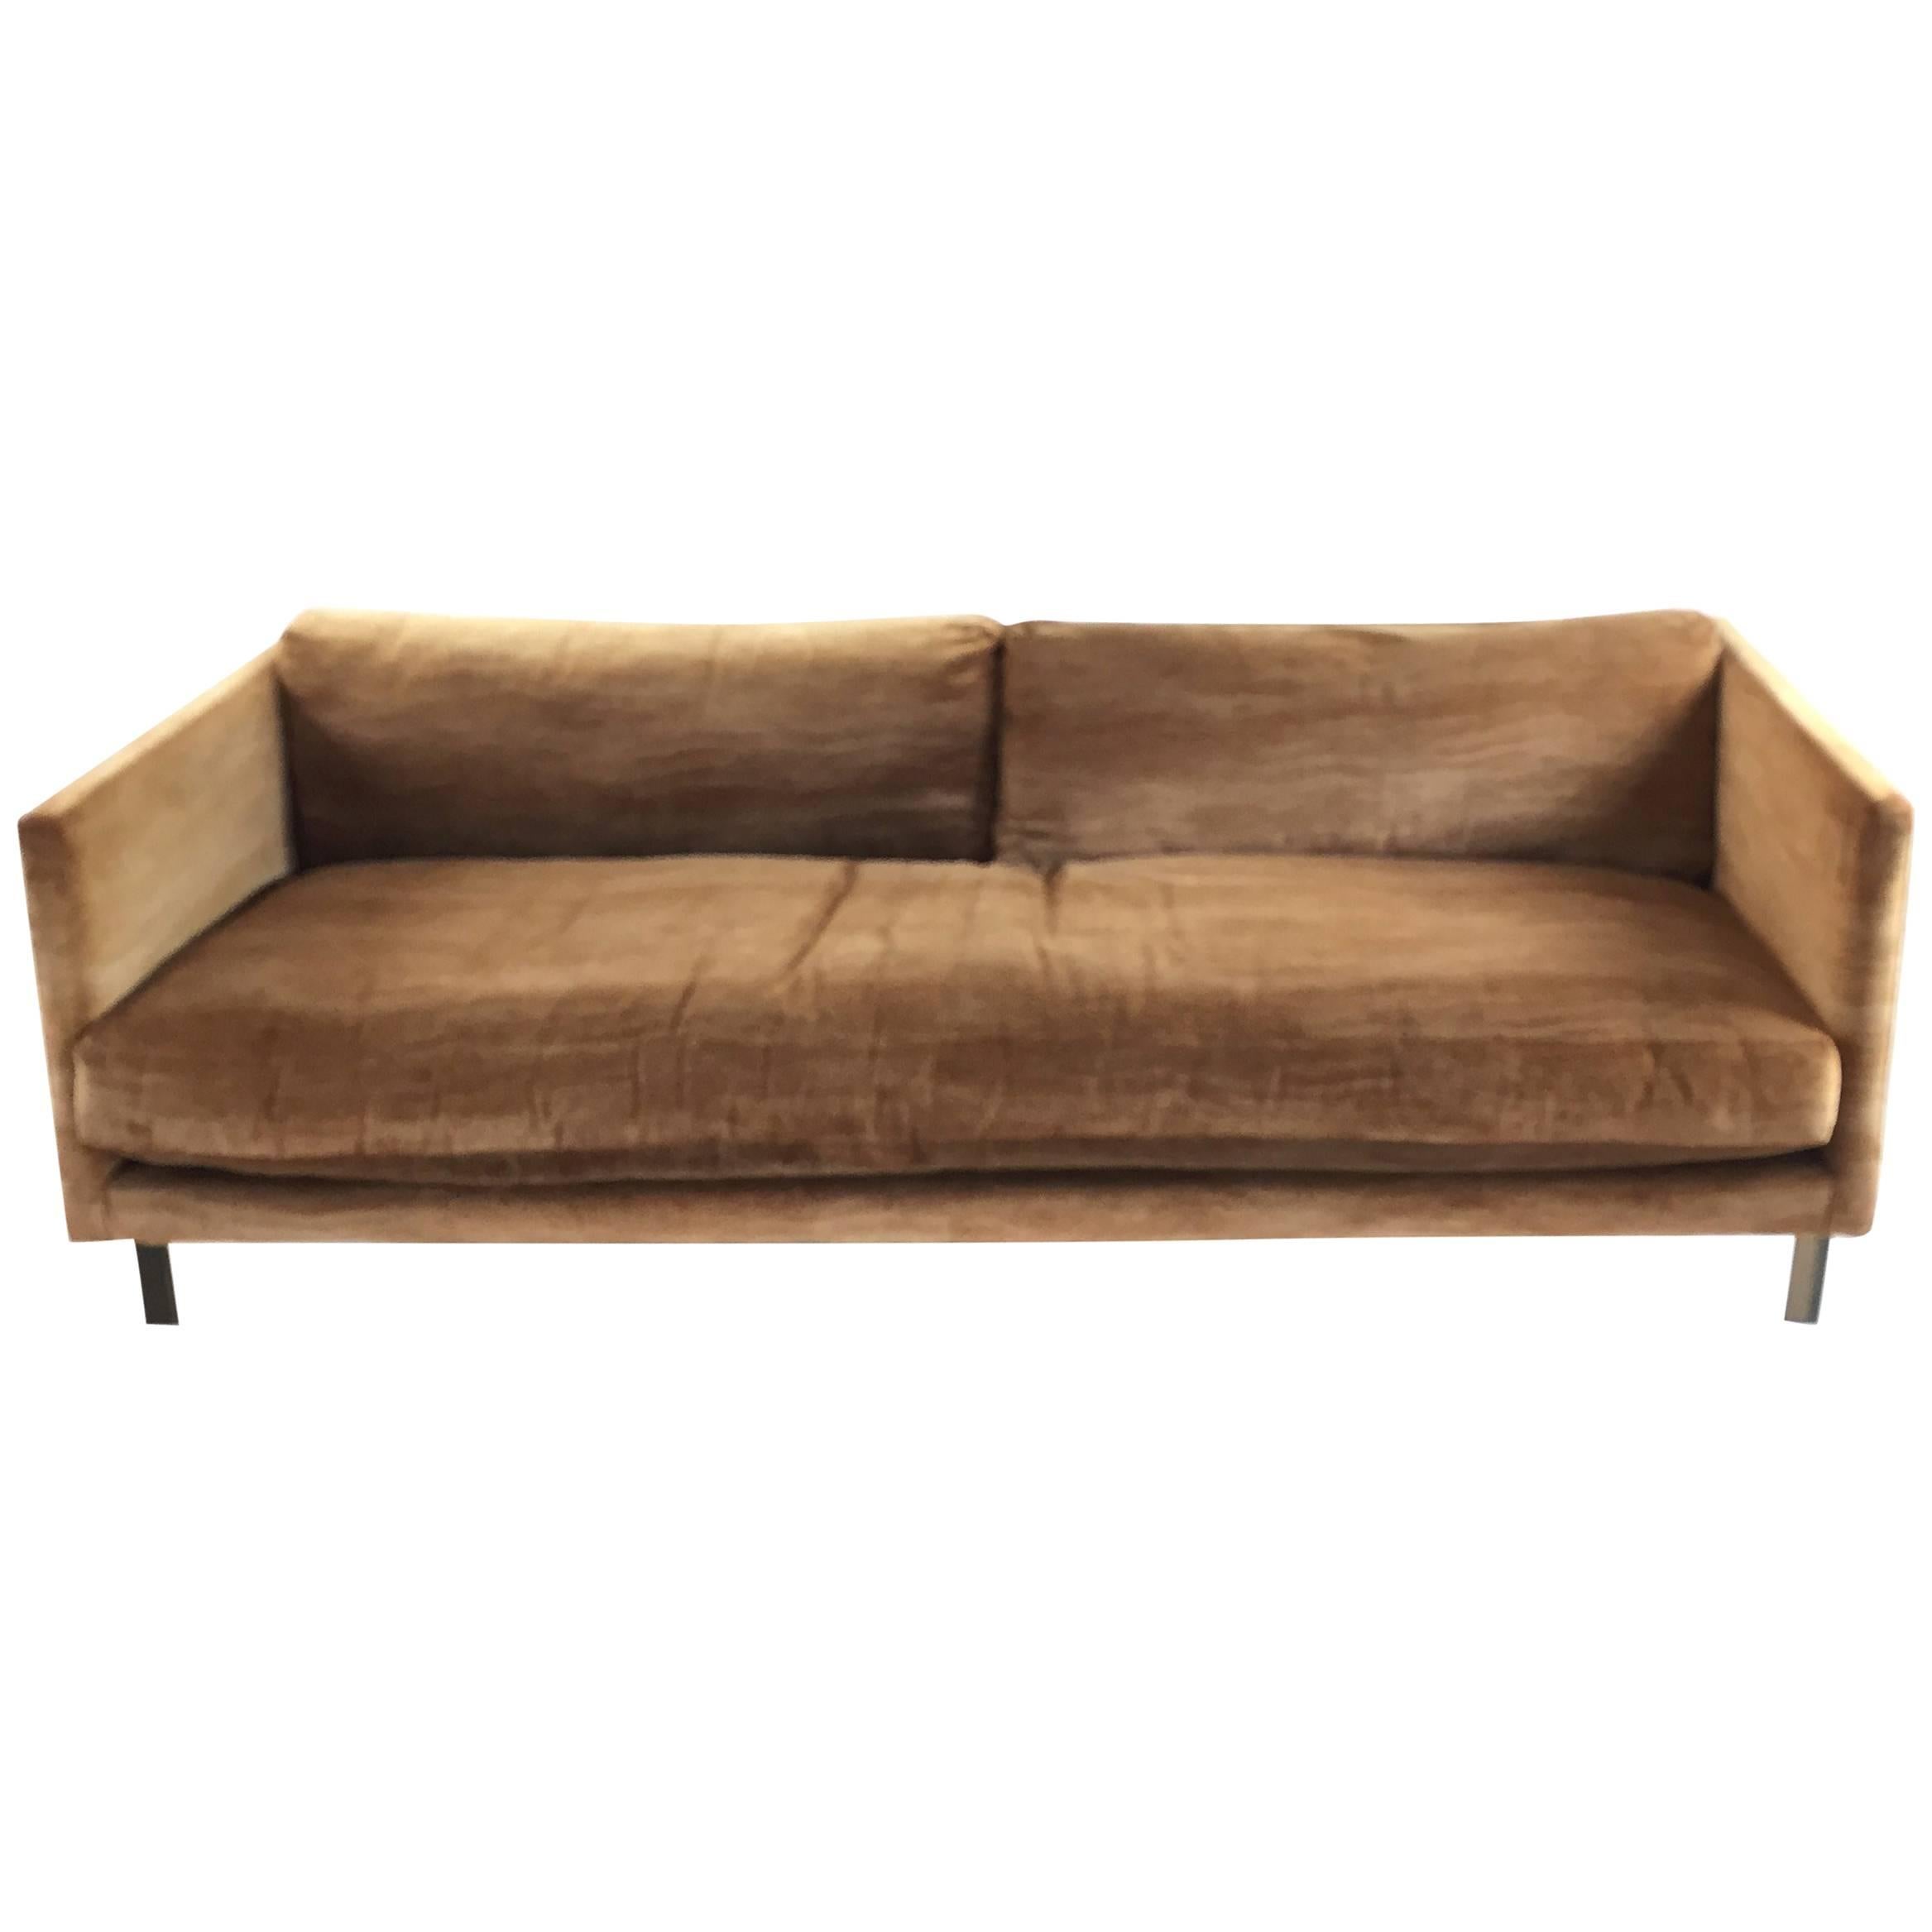 Milo Baughman "Drop In" Sofa in Jack Lenor Larsen Fabric For Sale